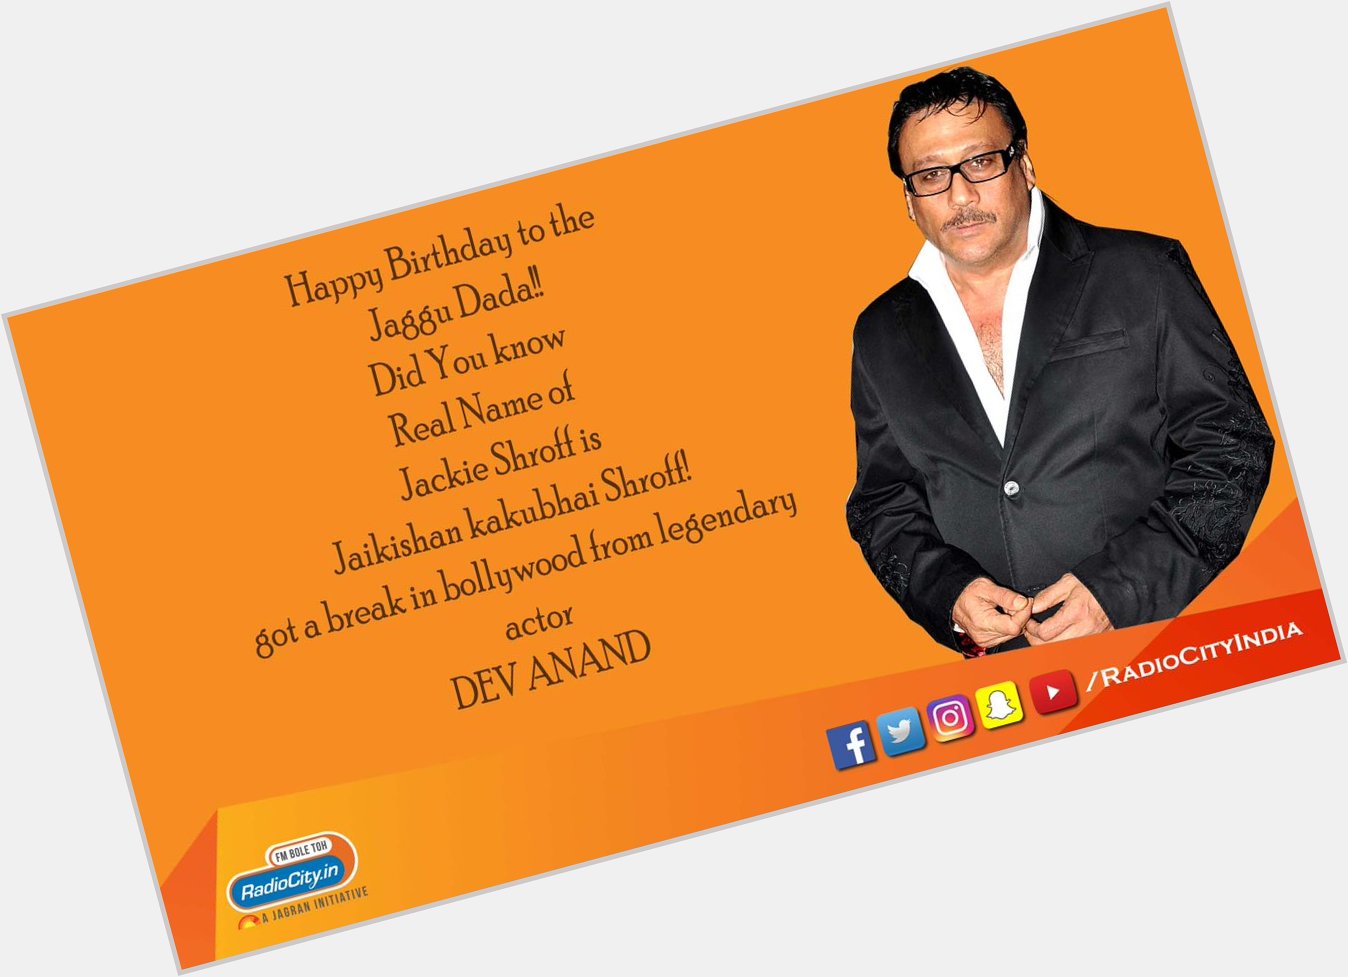  Wish Jaggu dada a.k.a Jackie Shroff a.k.a Jaikishan Kakubhai Shroff
a very Happy Birthday!! 